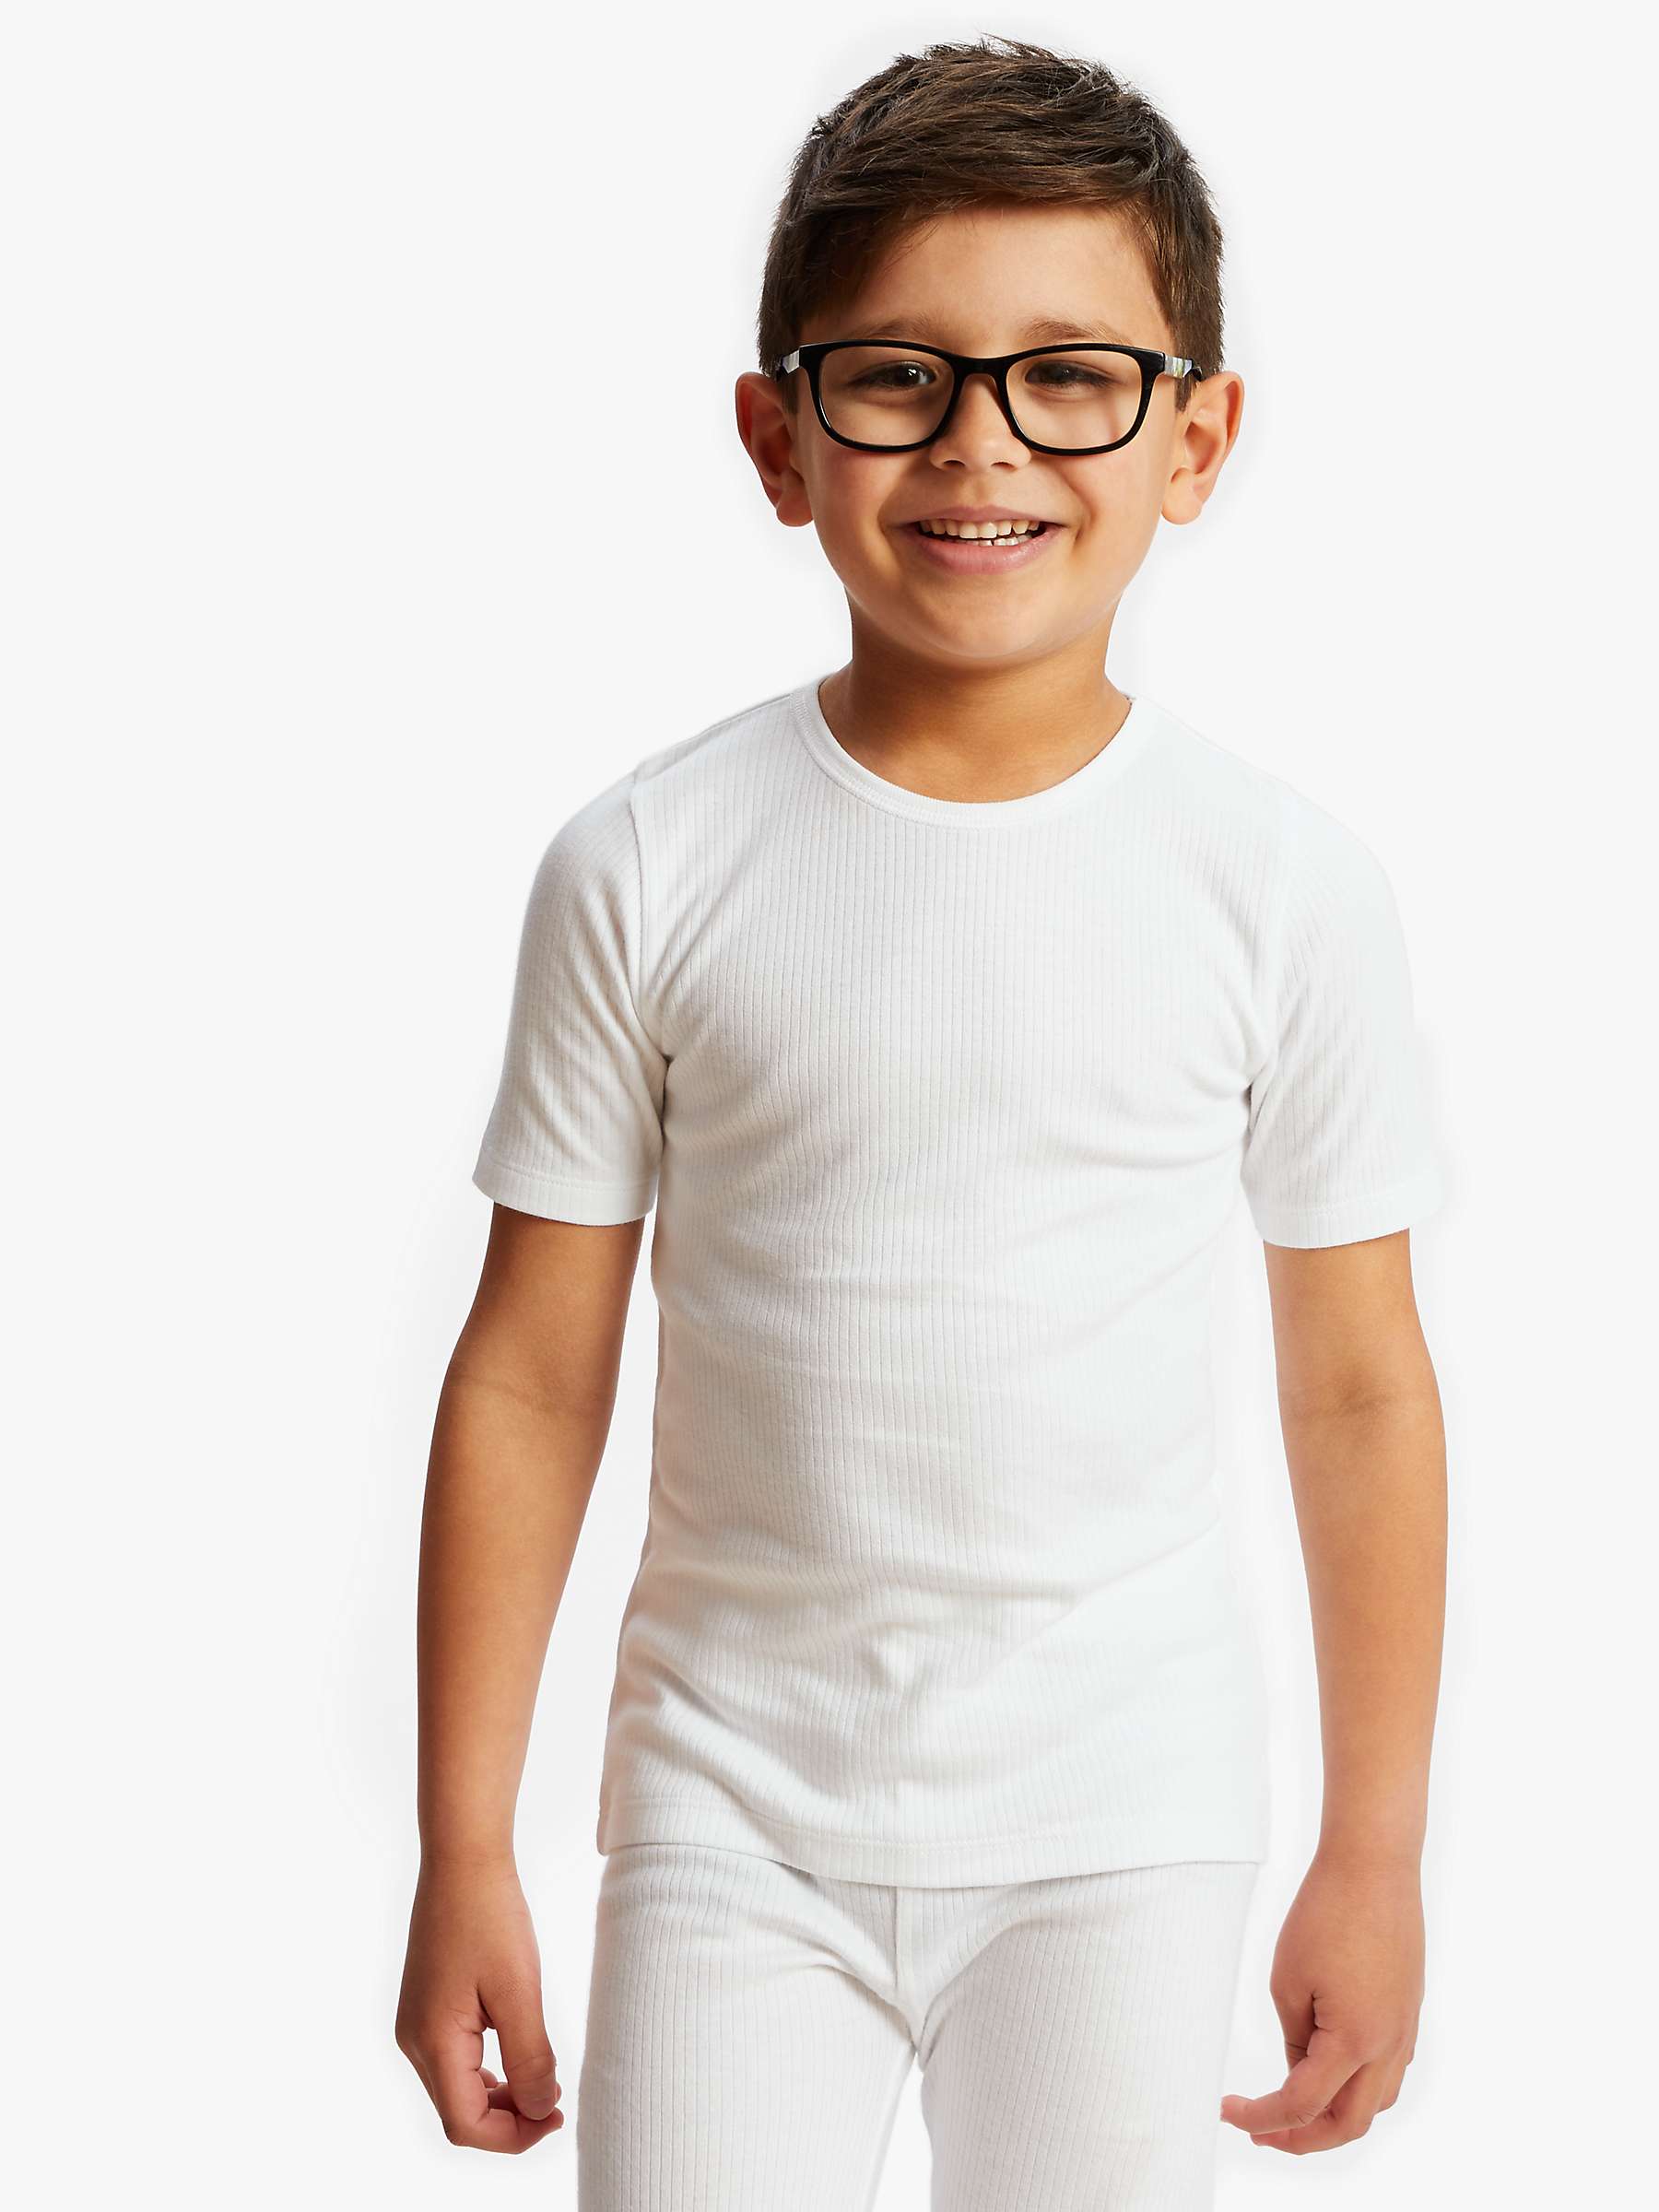 Buy John Lewis Kids' Thermal Short Sleeve Top, Pack of 2, White Online at johnlewis.com